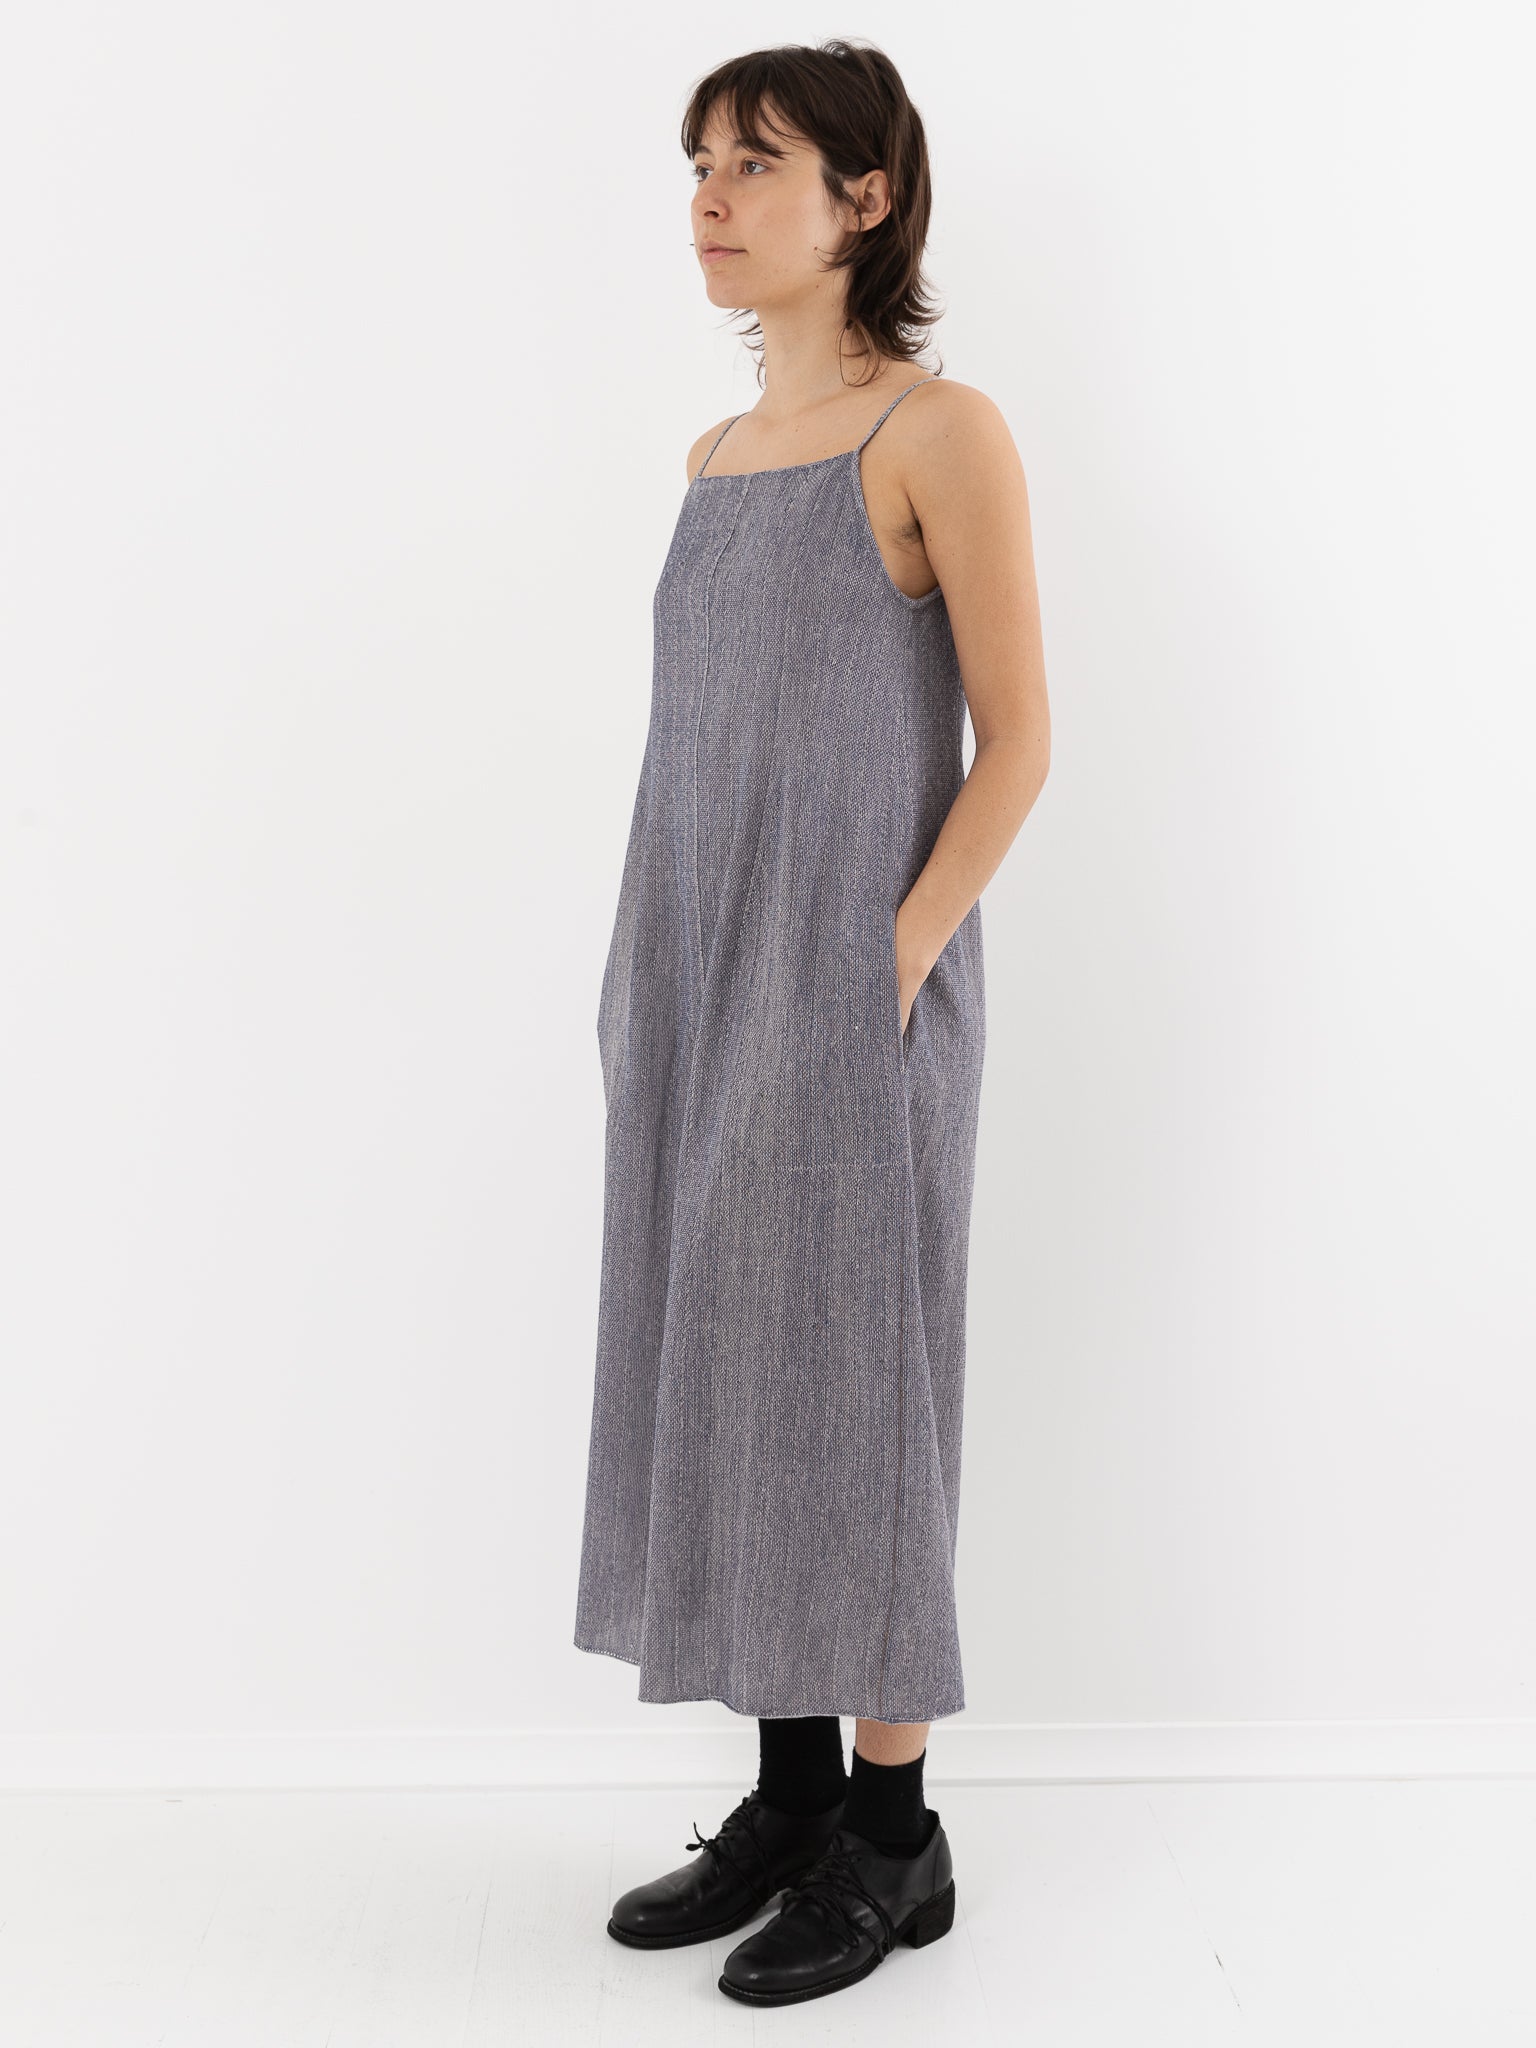 Boboutic Sun Dress, Blue Stripe - Worthwhile, Inc.